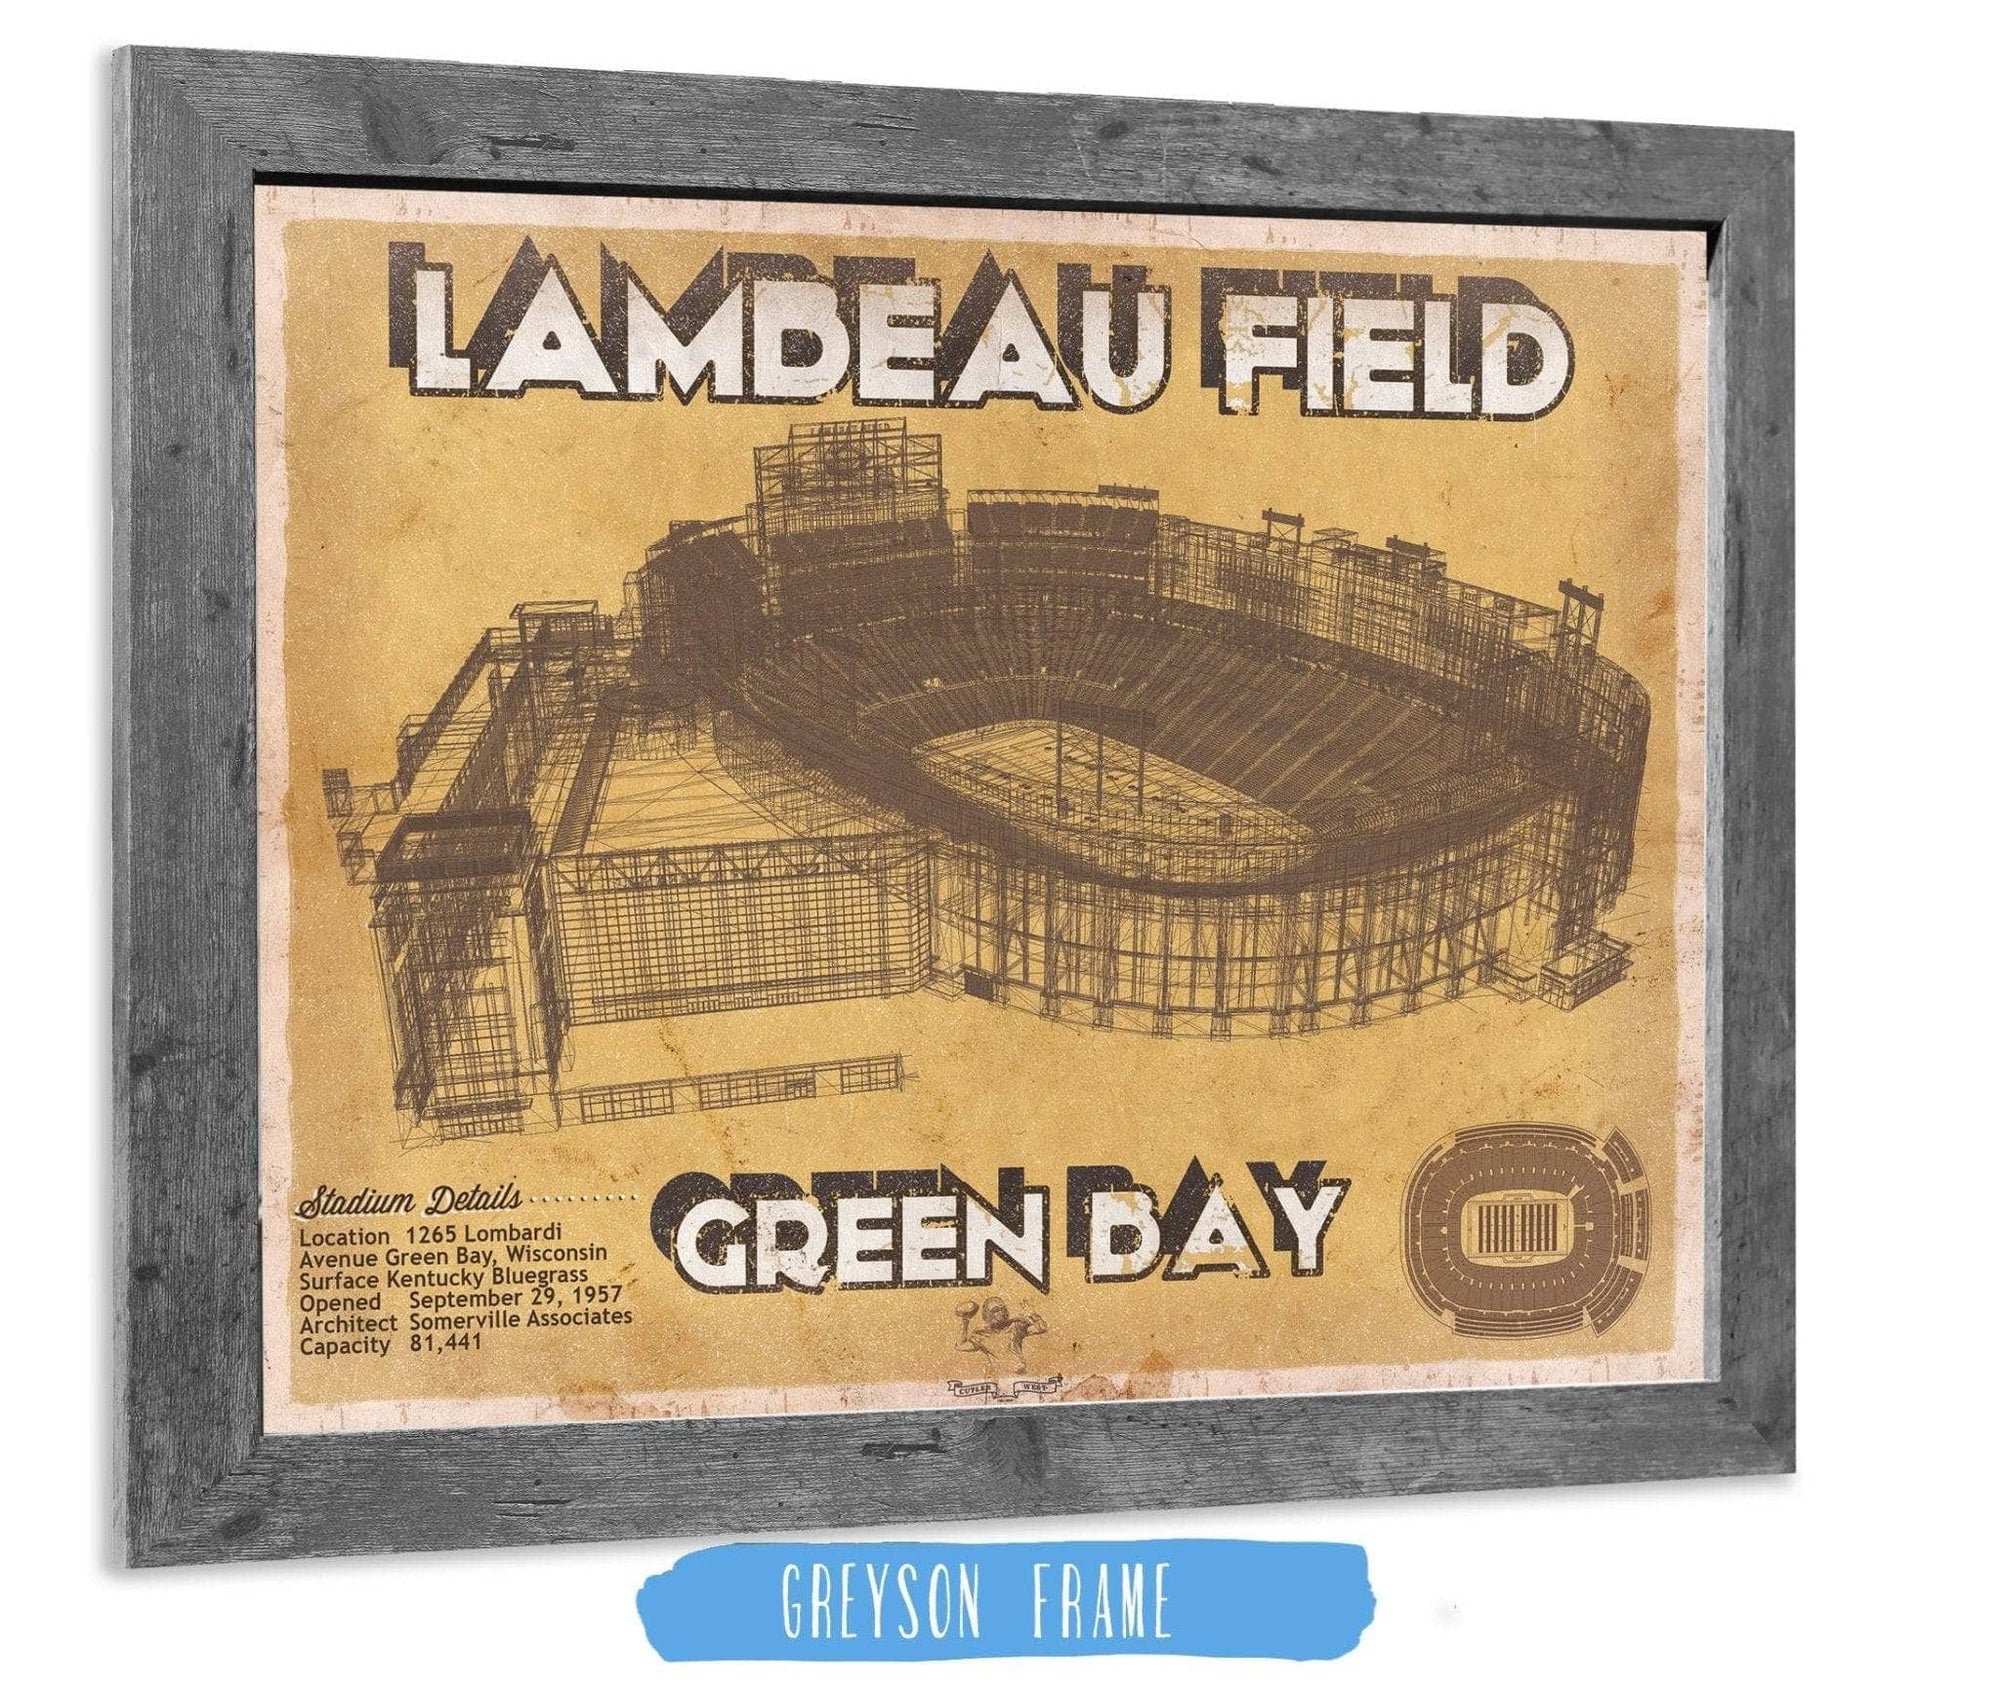 Cutler West Pro Football Collection 14" x 11" / Greyson Frame Green Bay Packers - Lambeau Field Vintage Football Print 698877220-TEAM_65969